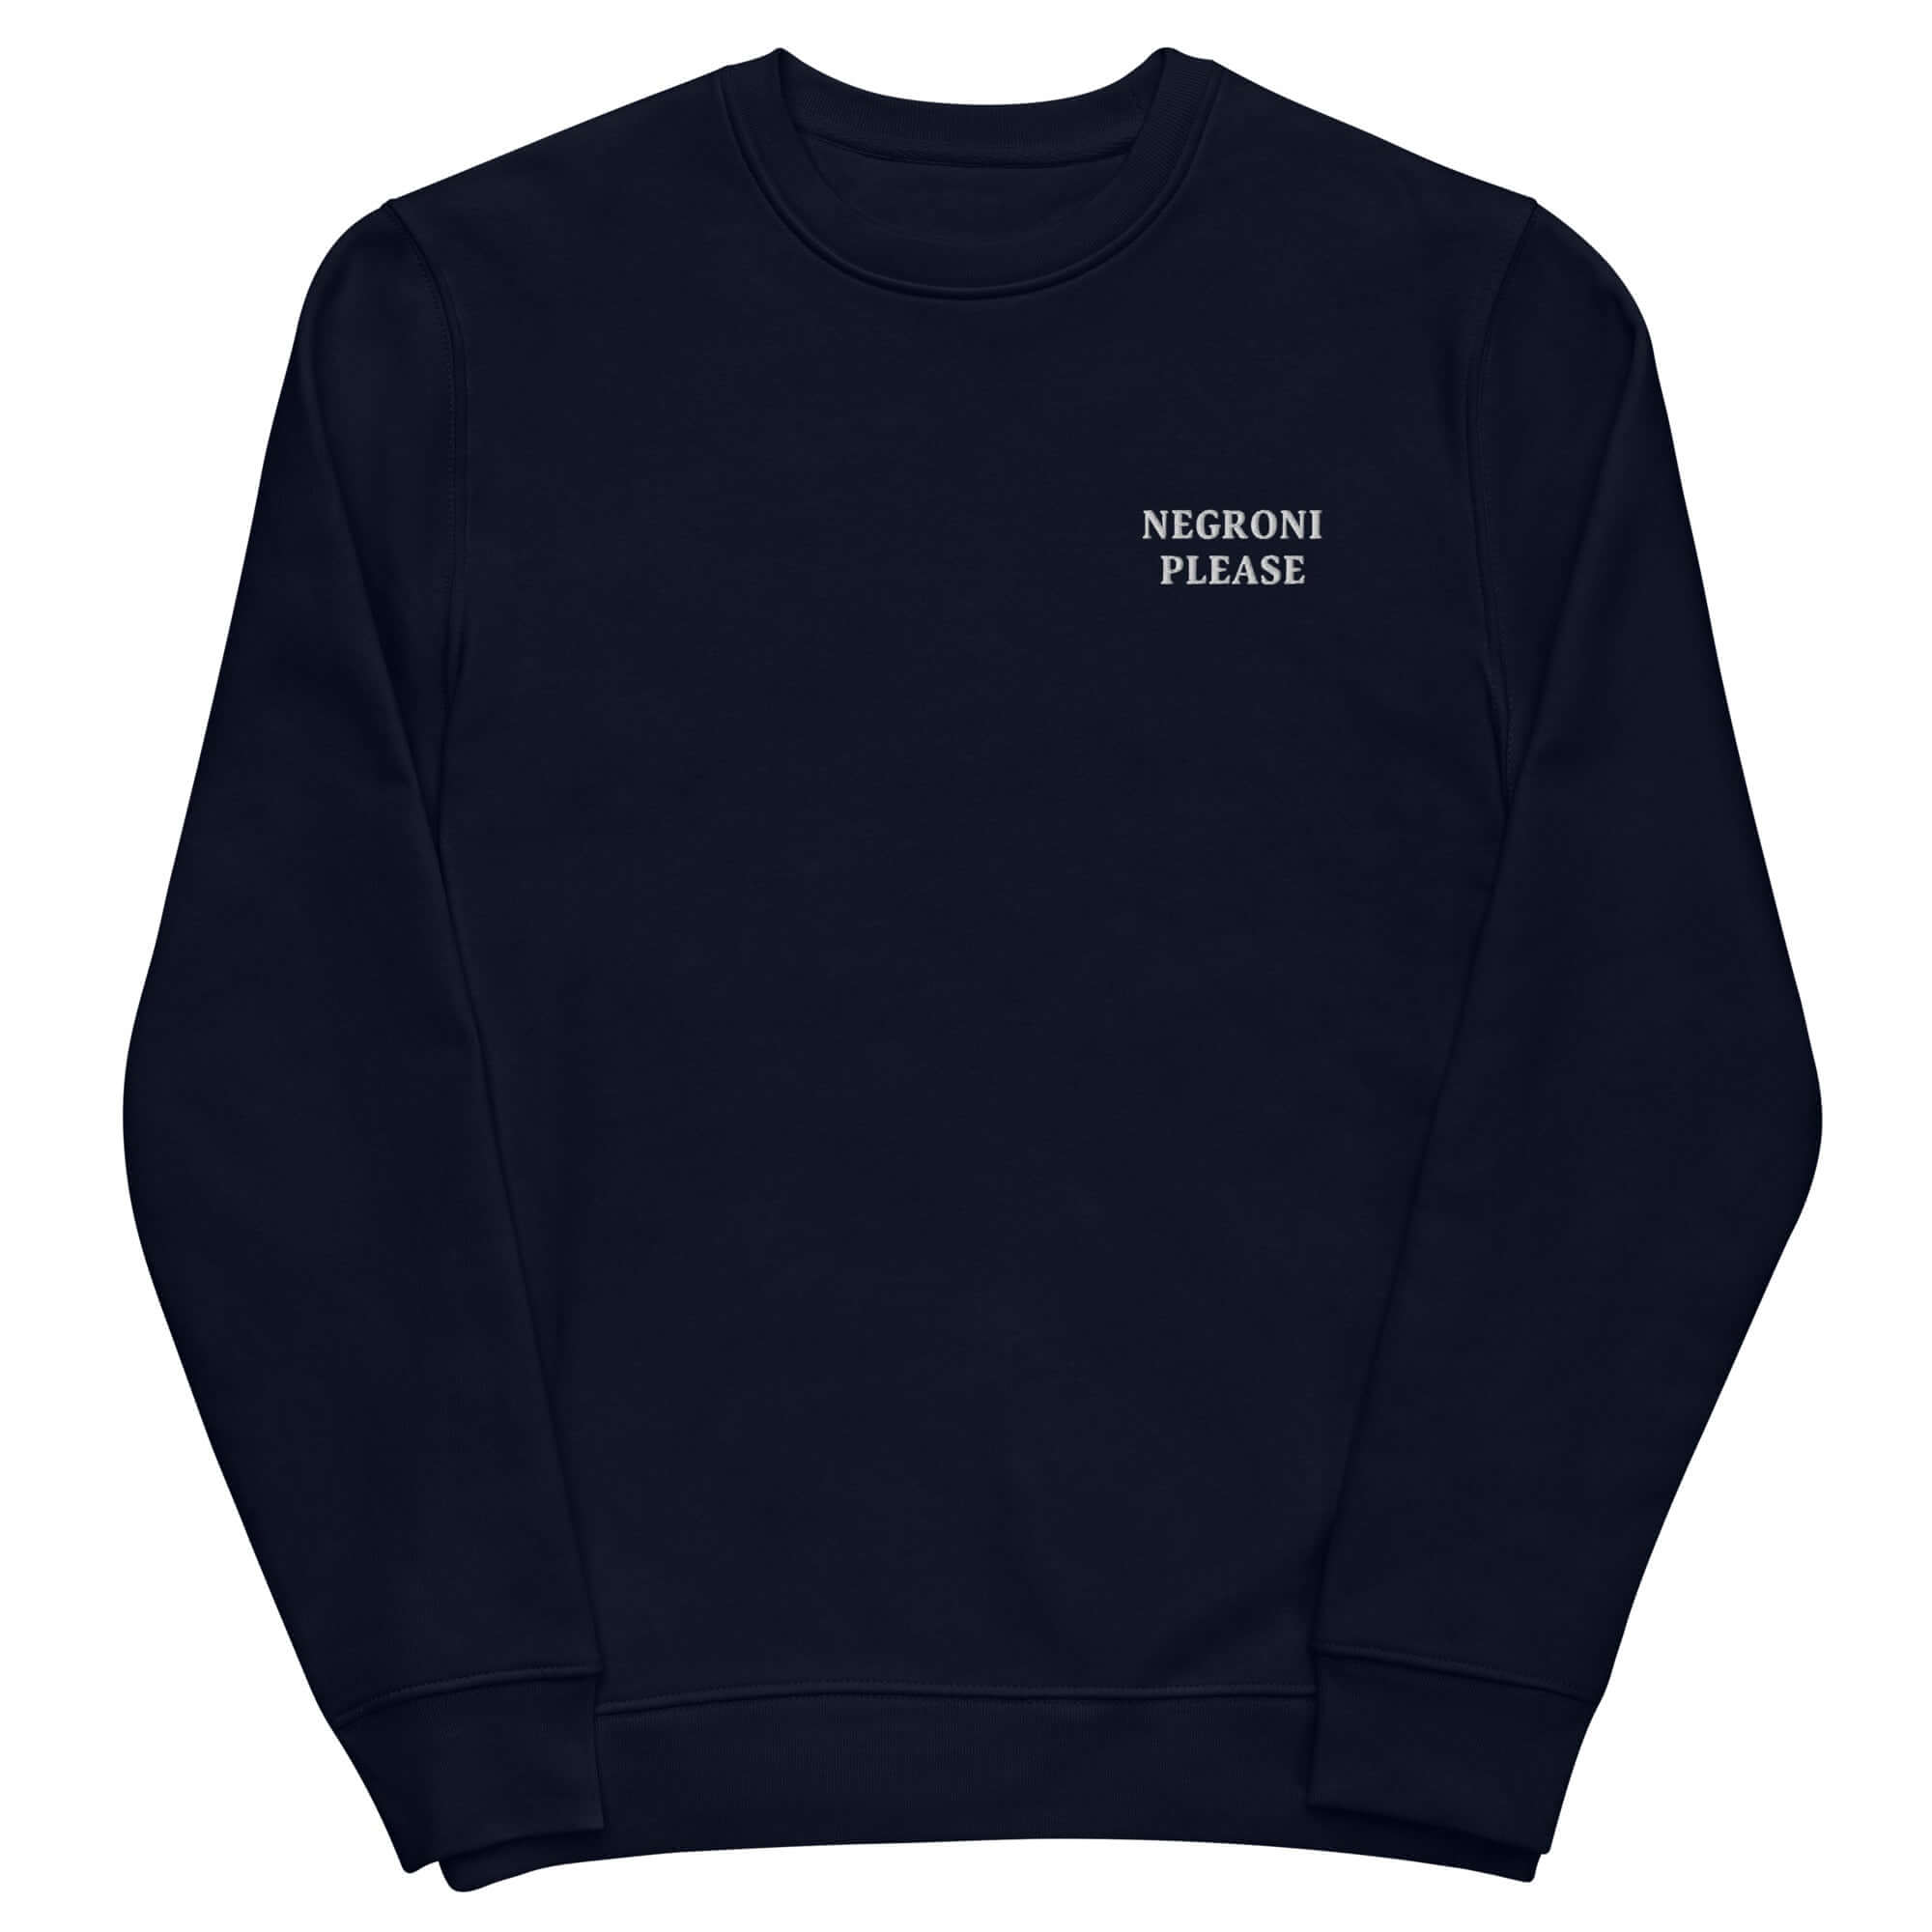 Negroni Please - Organic Embroidered Sweatshirt - The Refined Spirit